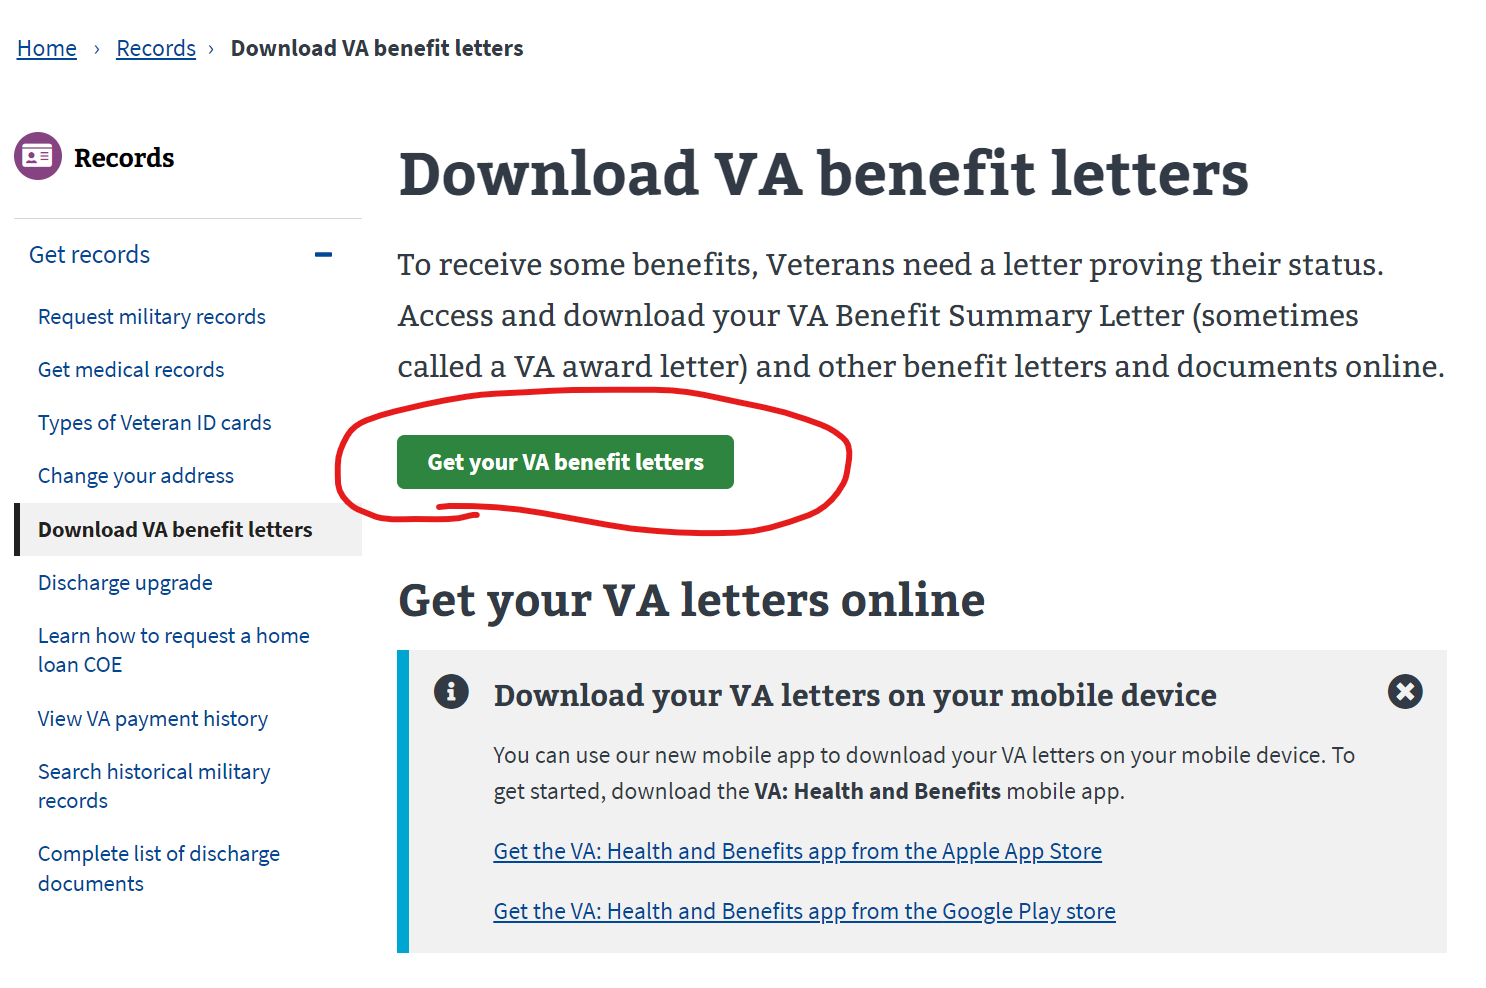 Click Get Your VA Benefit Letters